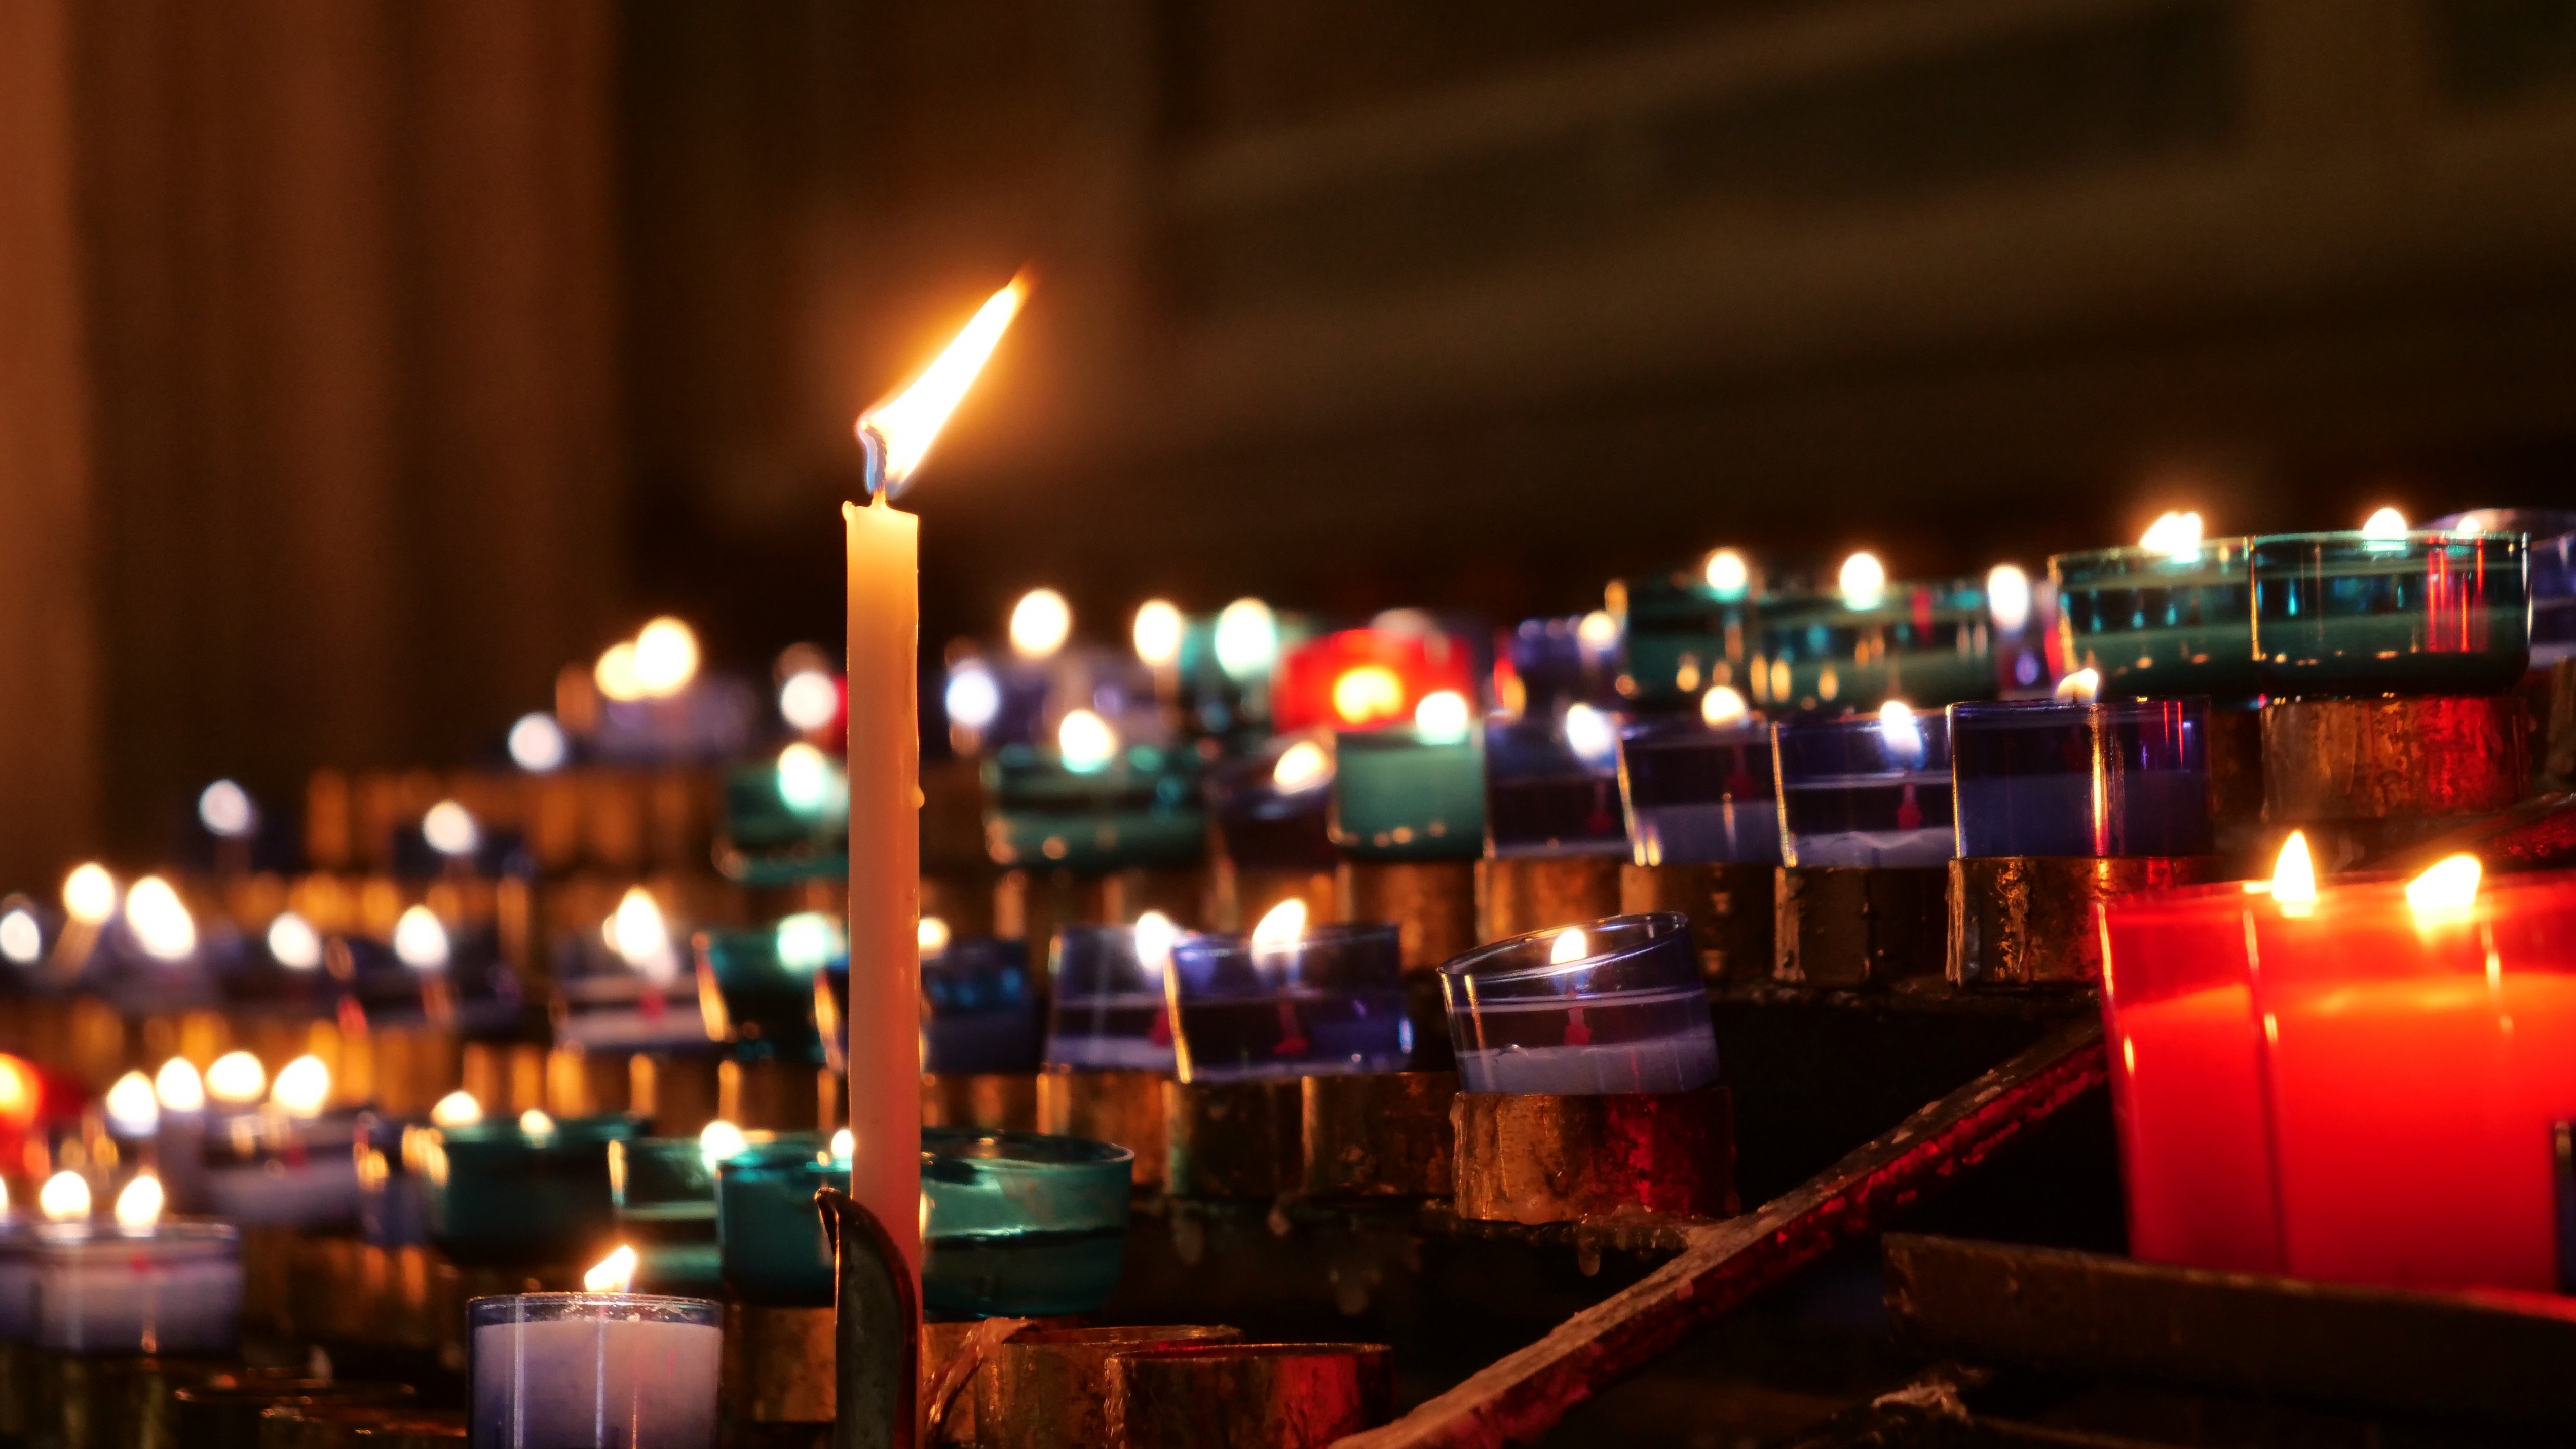 Candles Church Lights Spiritual 5084x2860